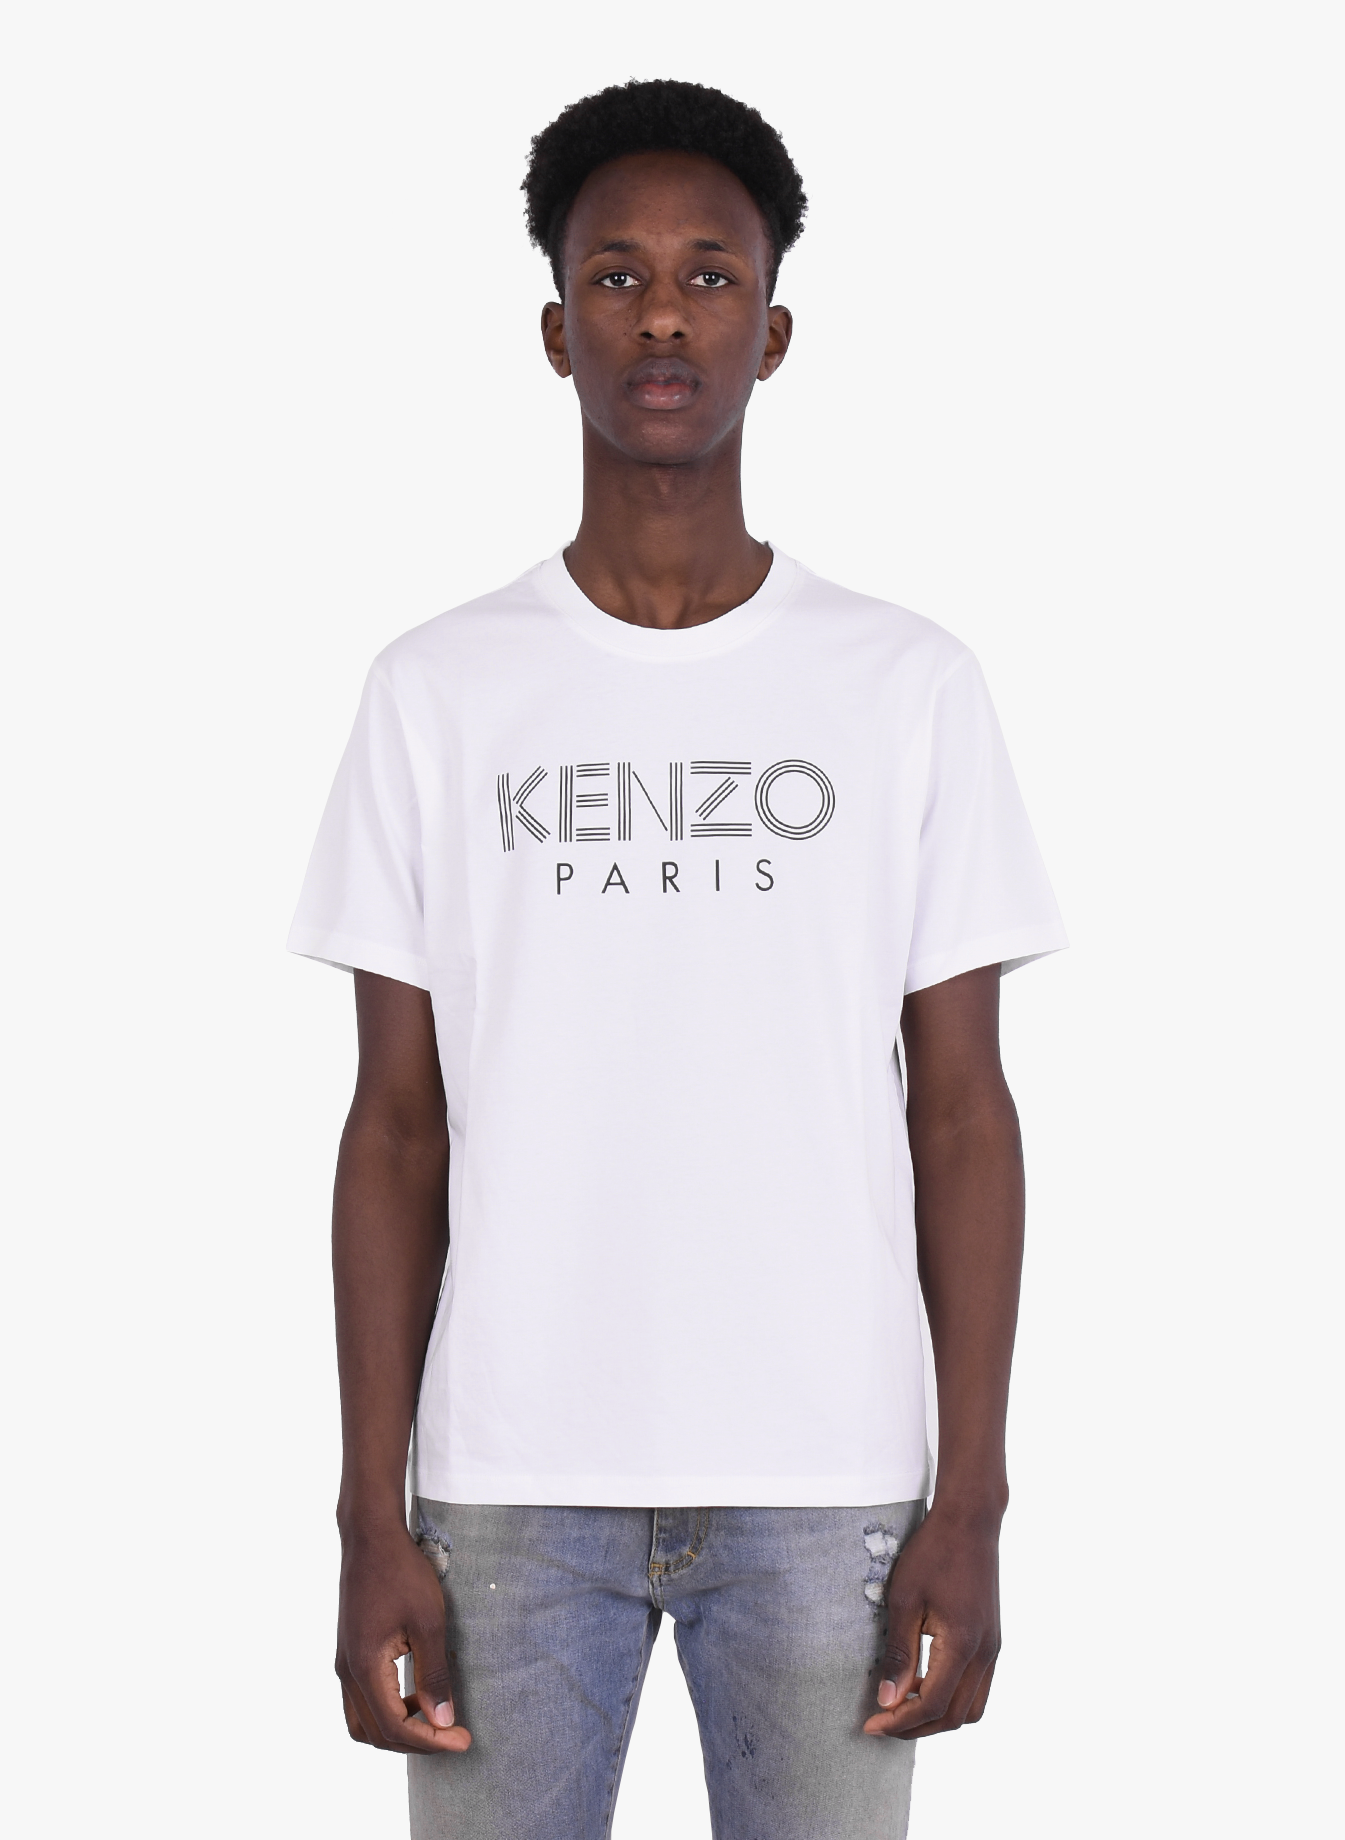 Kenzo Paris 'Classic Logo' T-shirt White - Mensquare